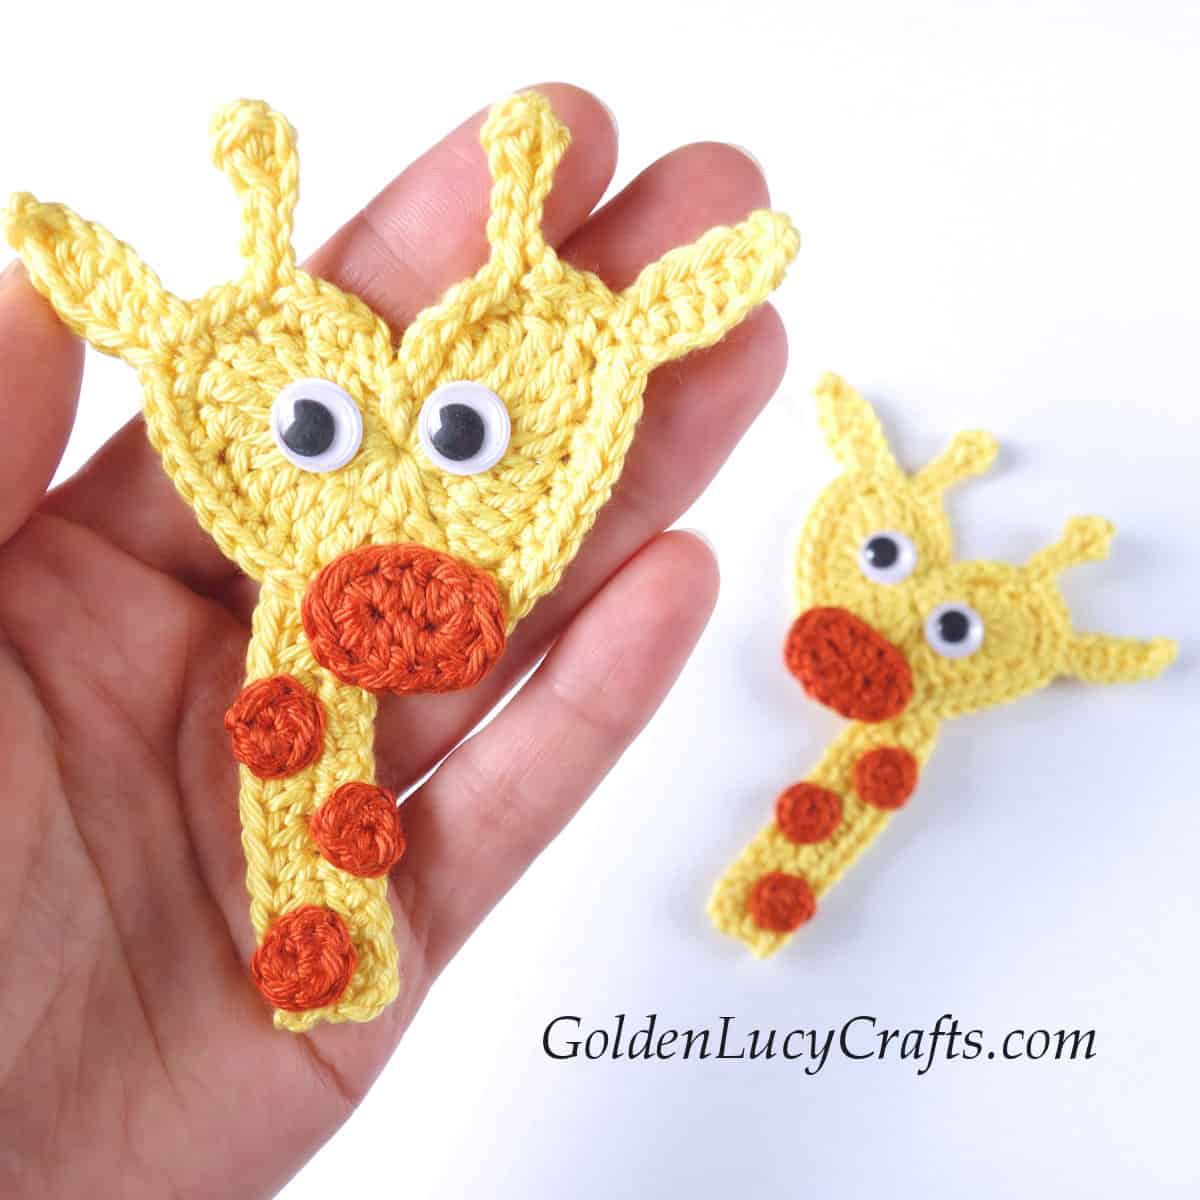 Crochet giraffe applique in the palm of a hand.